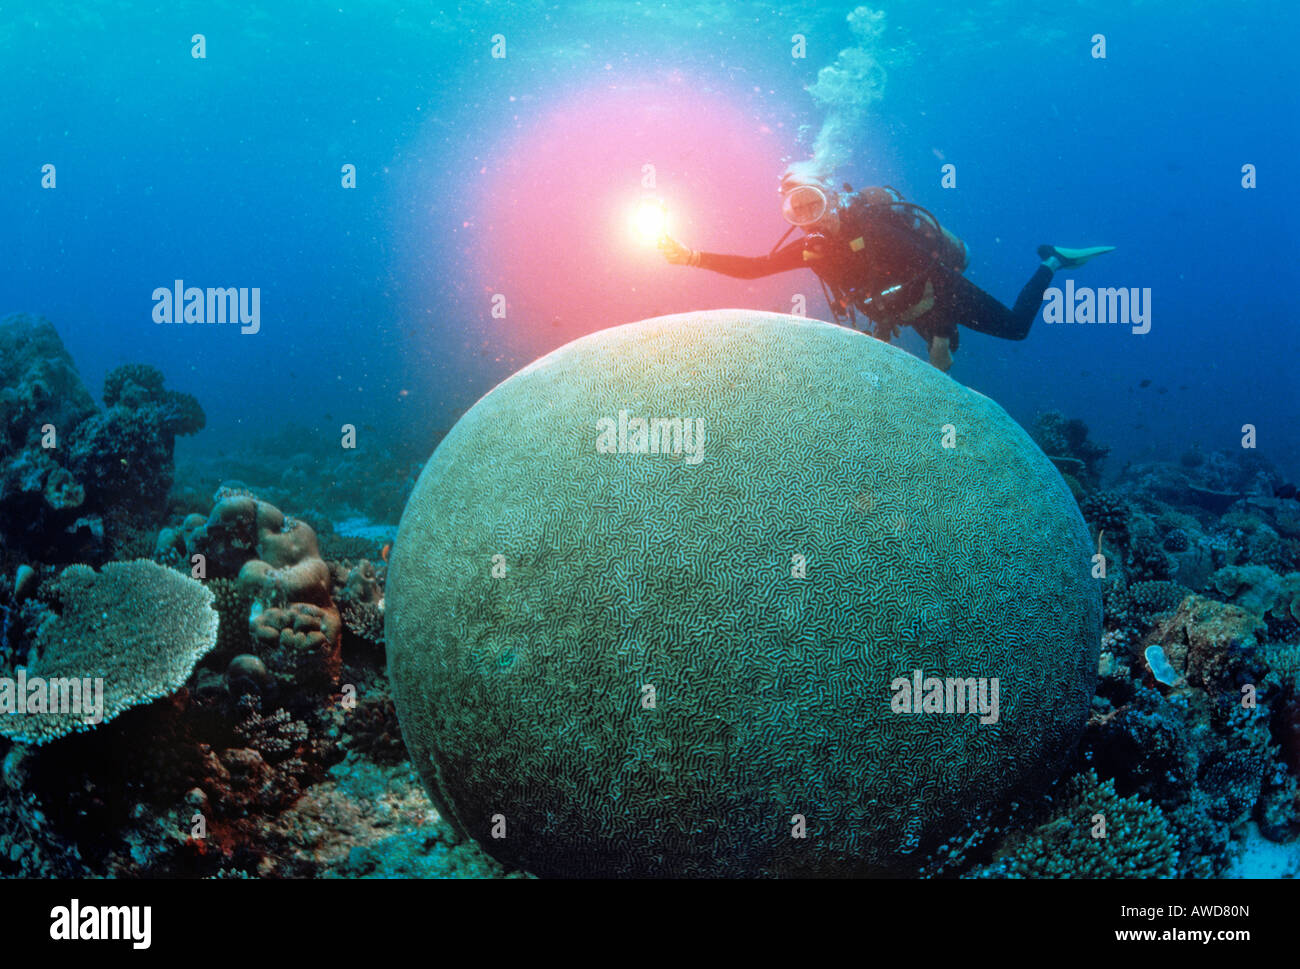 Green Brain Coral (Platygyra daedalea), scuba diver with light, underwater photograph, Indian Ocean Stock Photo